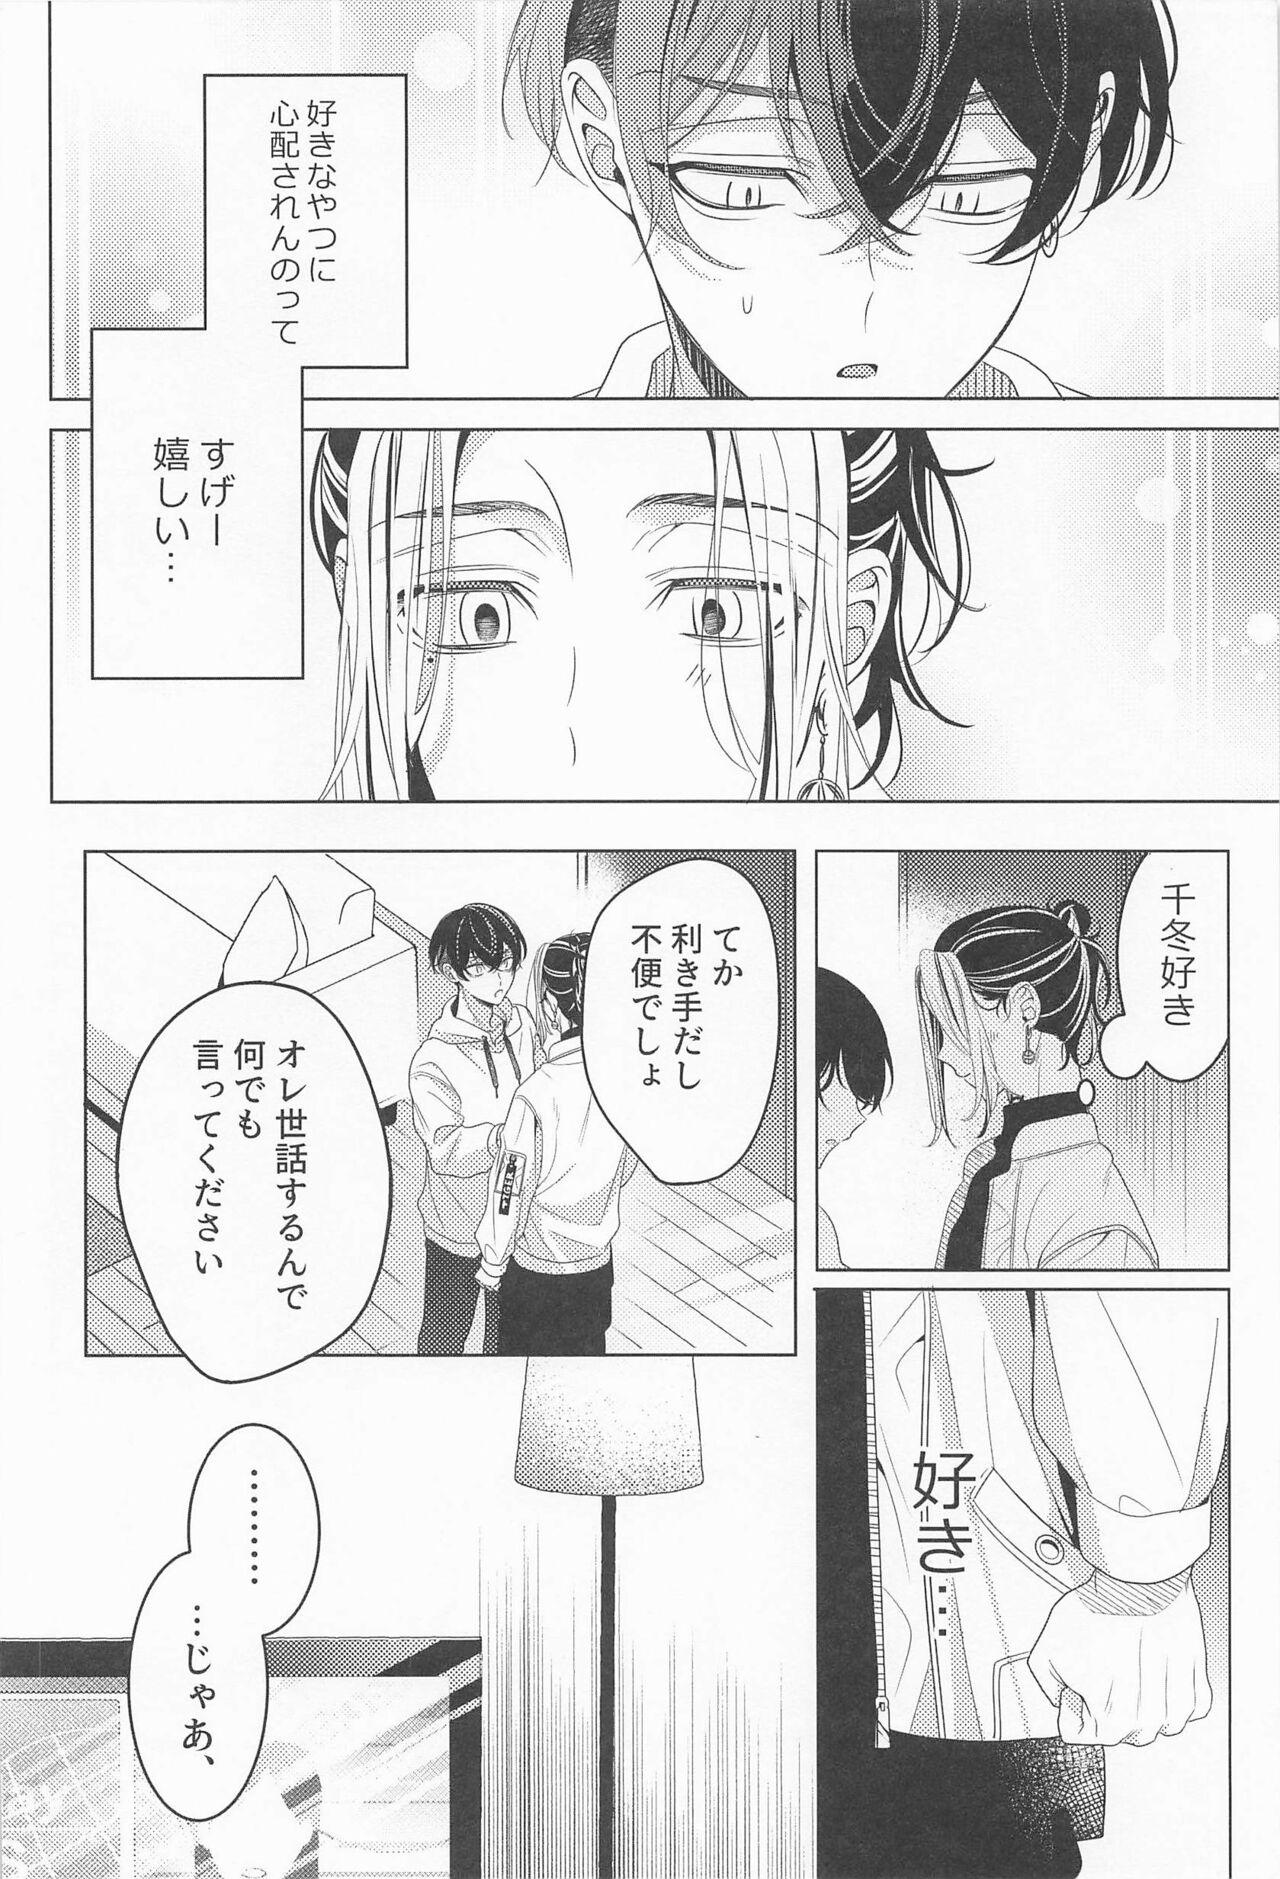 Her sukidakarashimpaishite - Tokyo revengers Highschool - Page 9